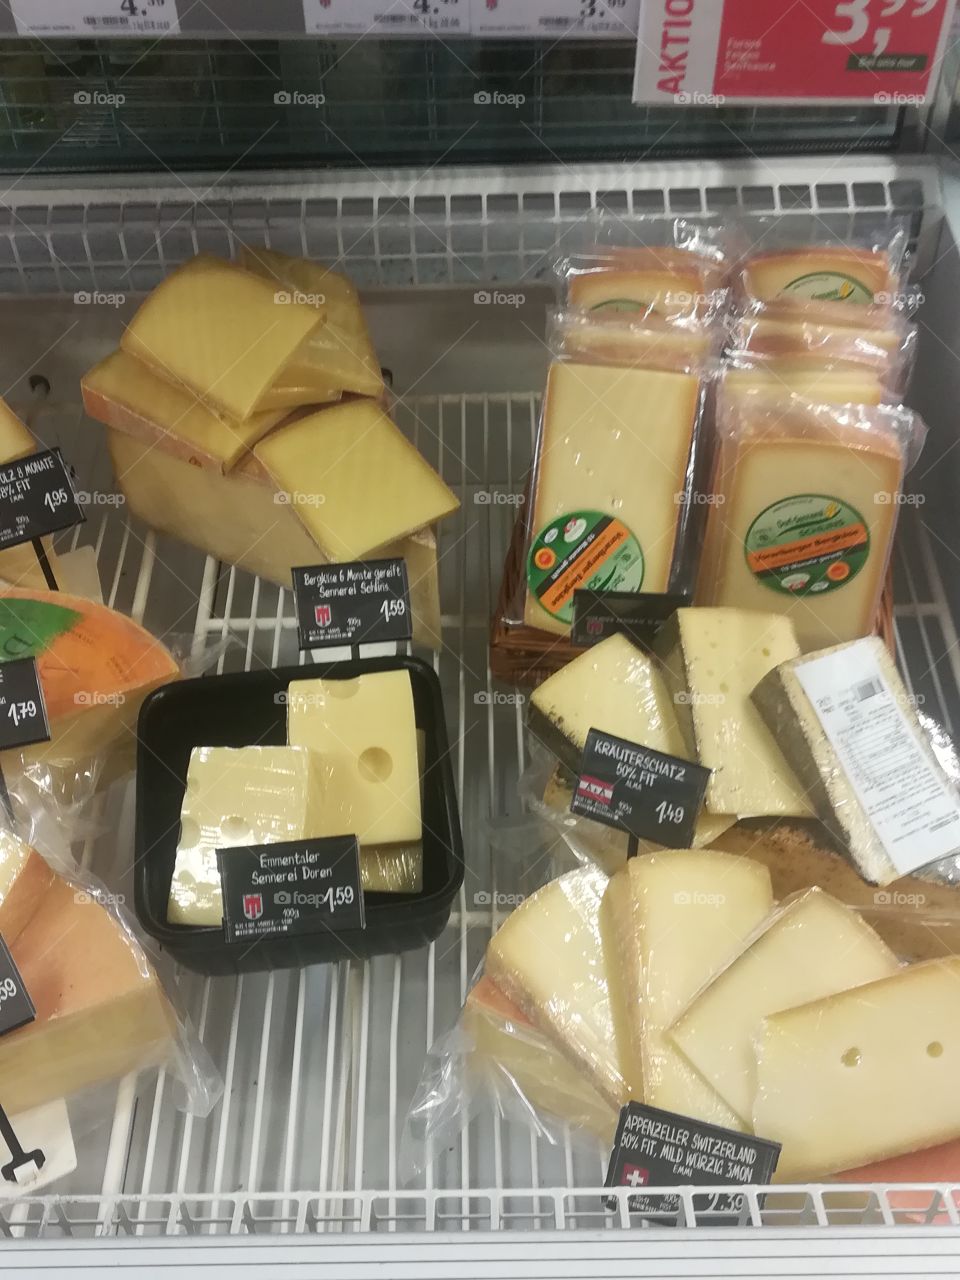 Vorarlberg cheese